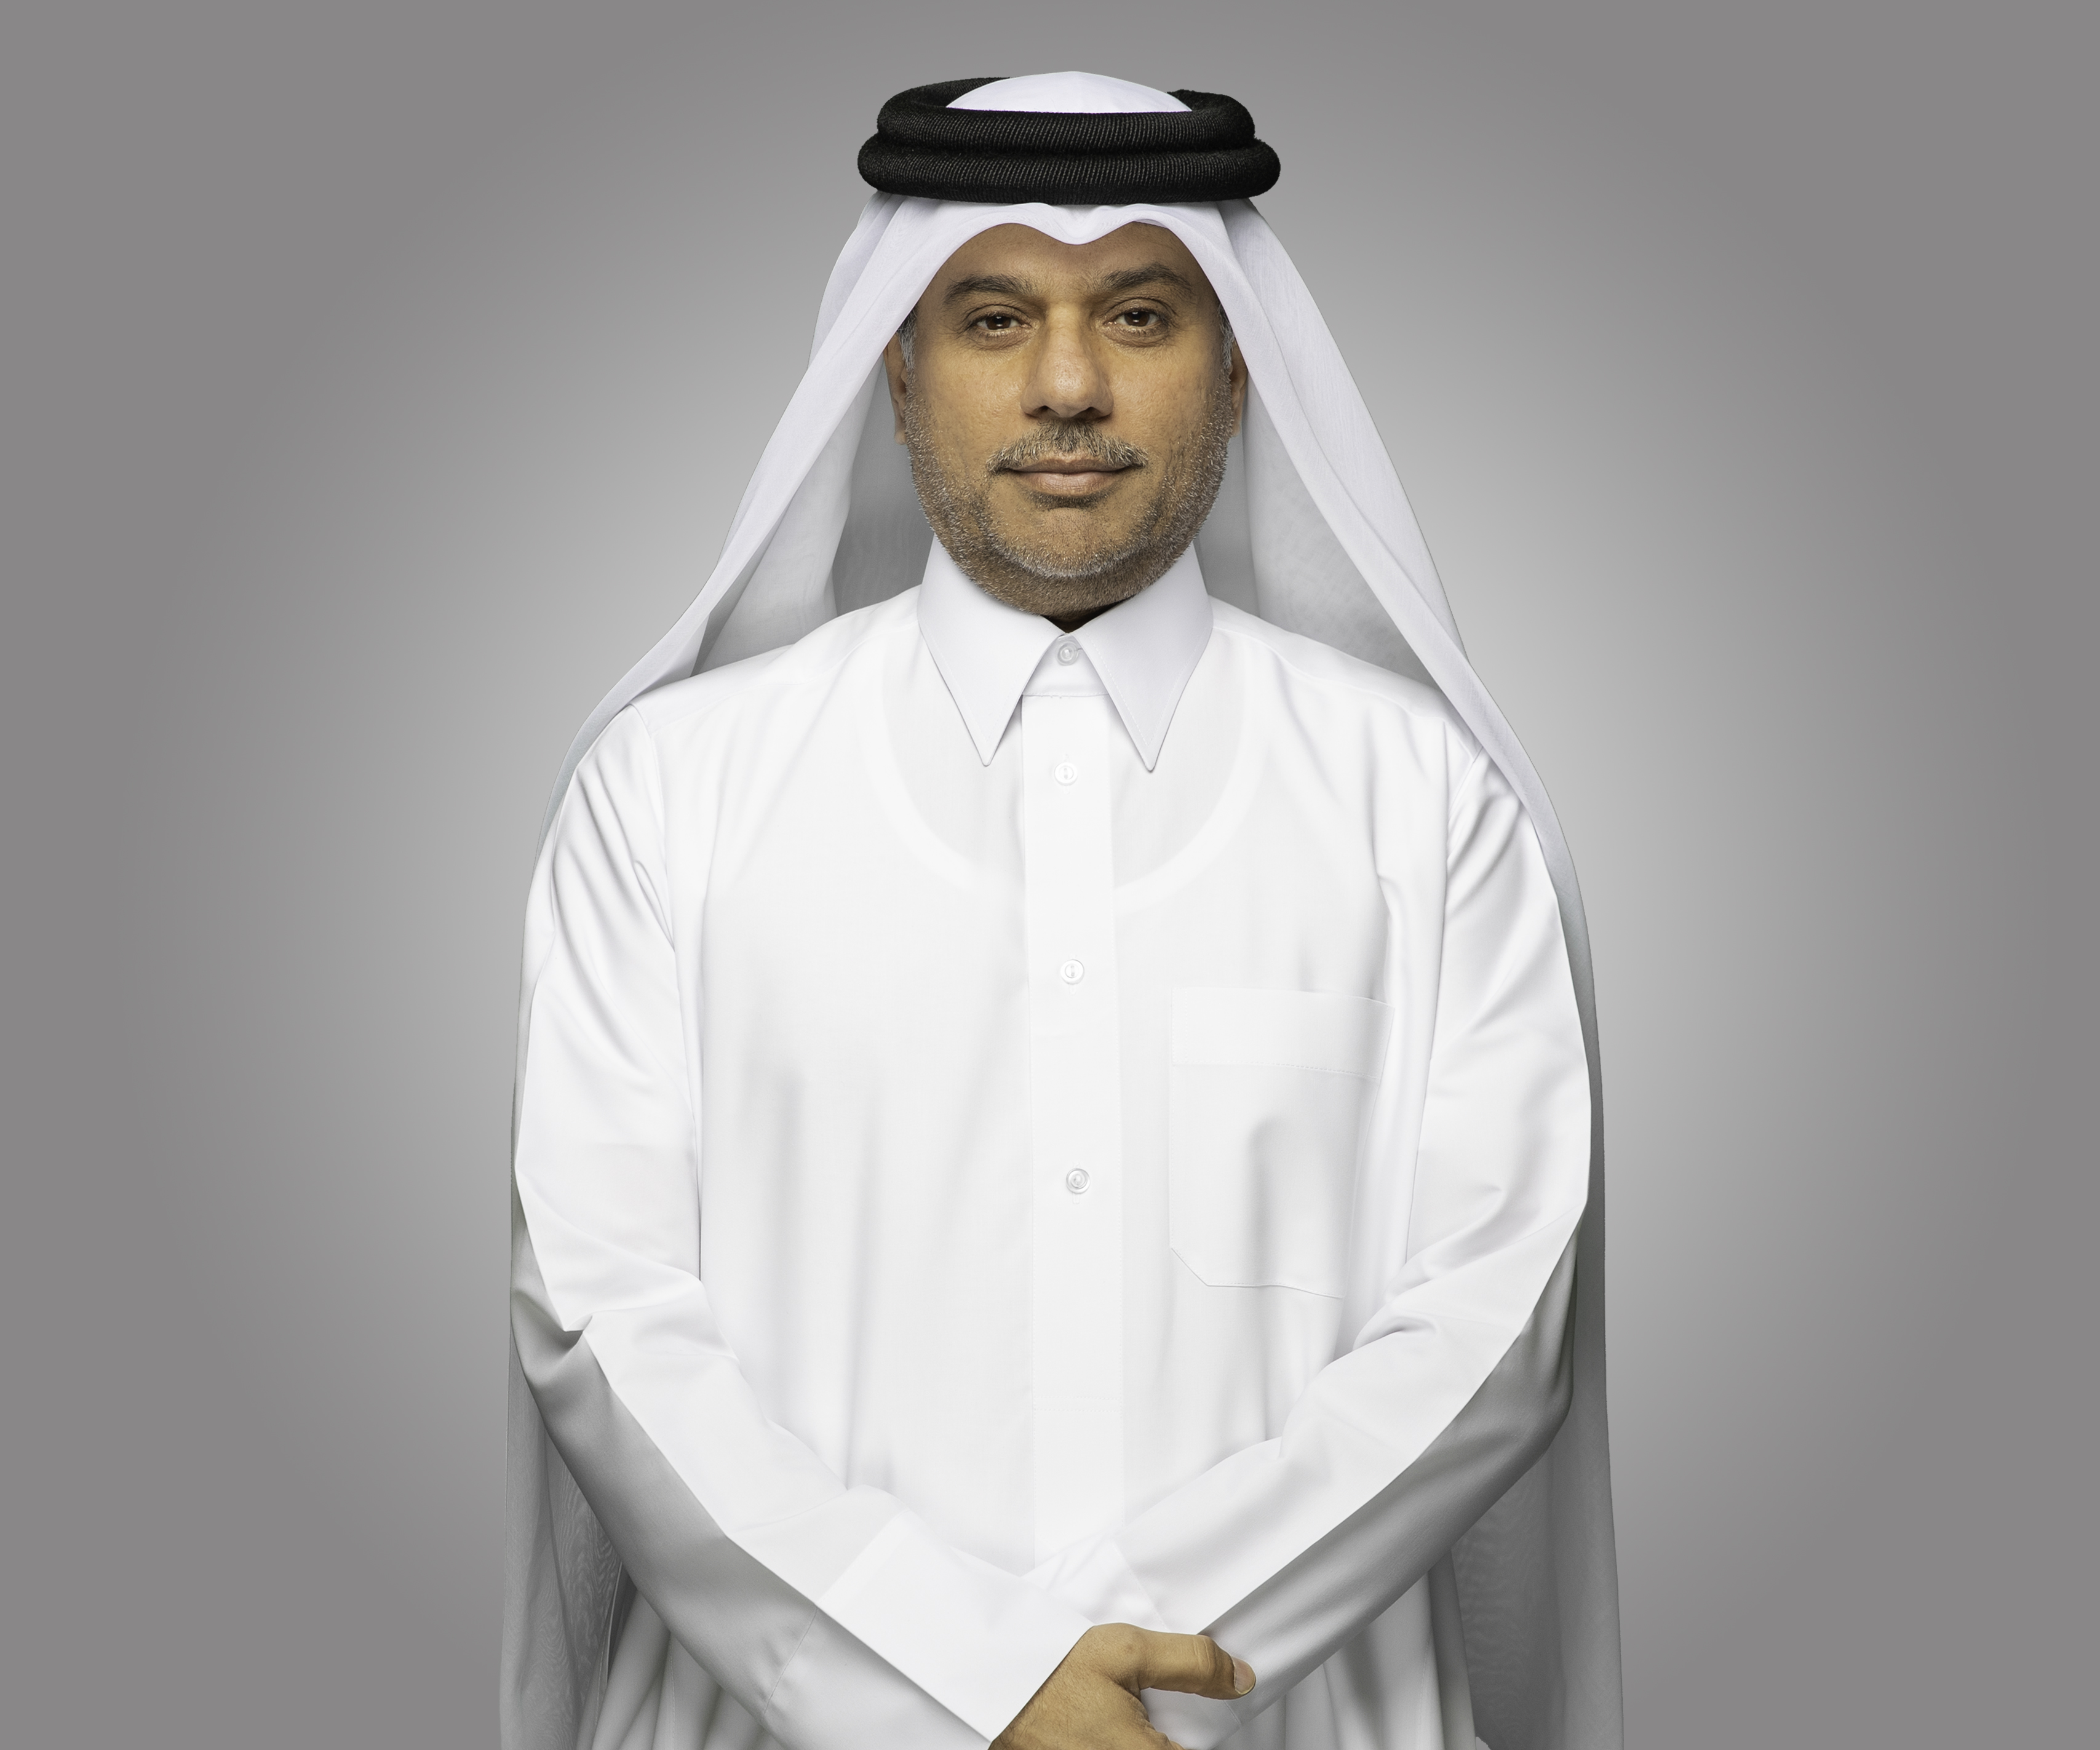 H.E. Abdulaziz Abdulqadir Al-Ahmed